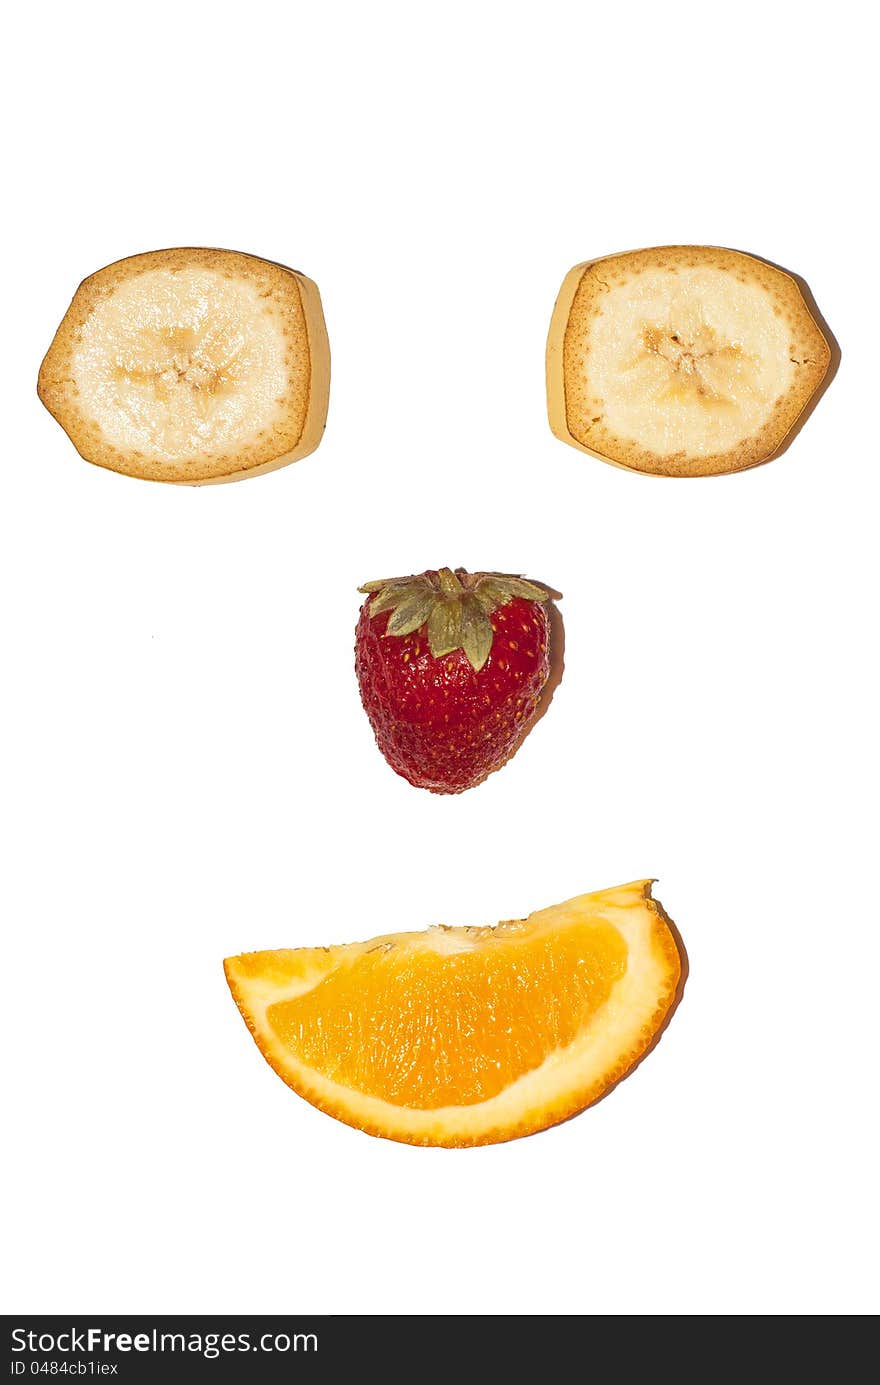 Fruit smiling face with strawberry banana and orange